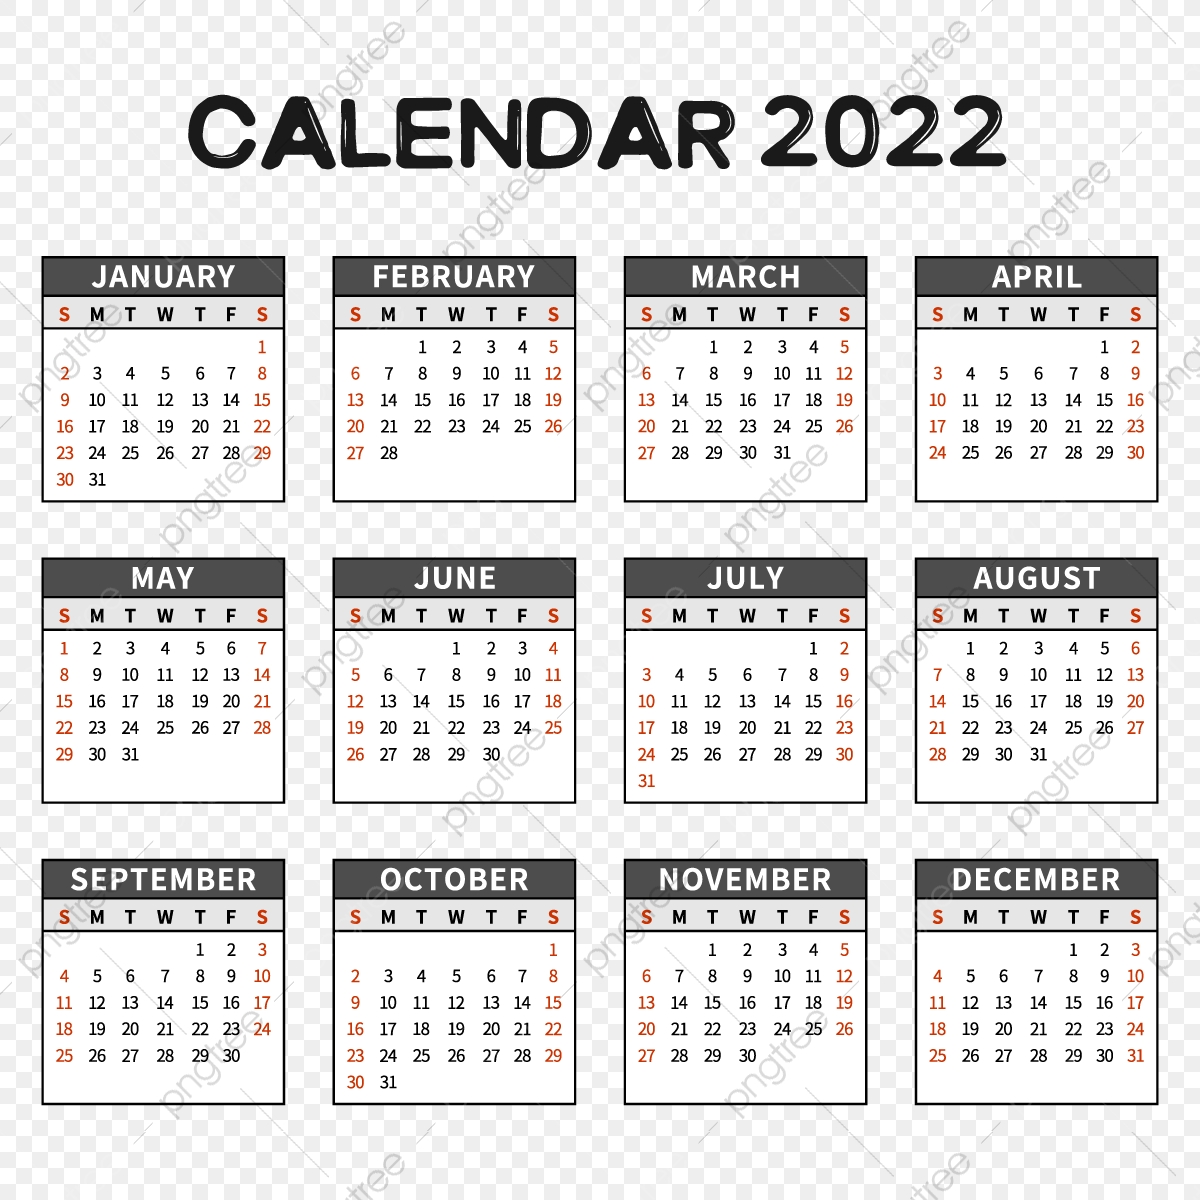 Calendar 2022 Black and White